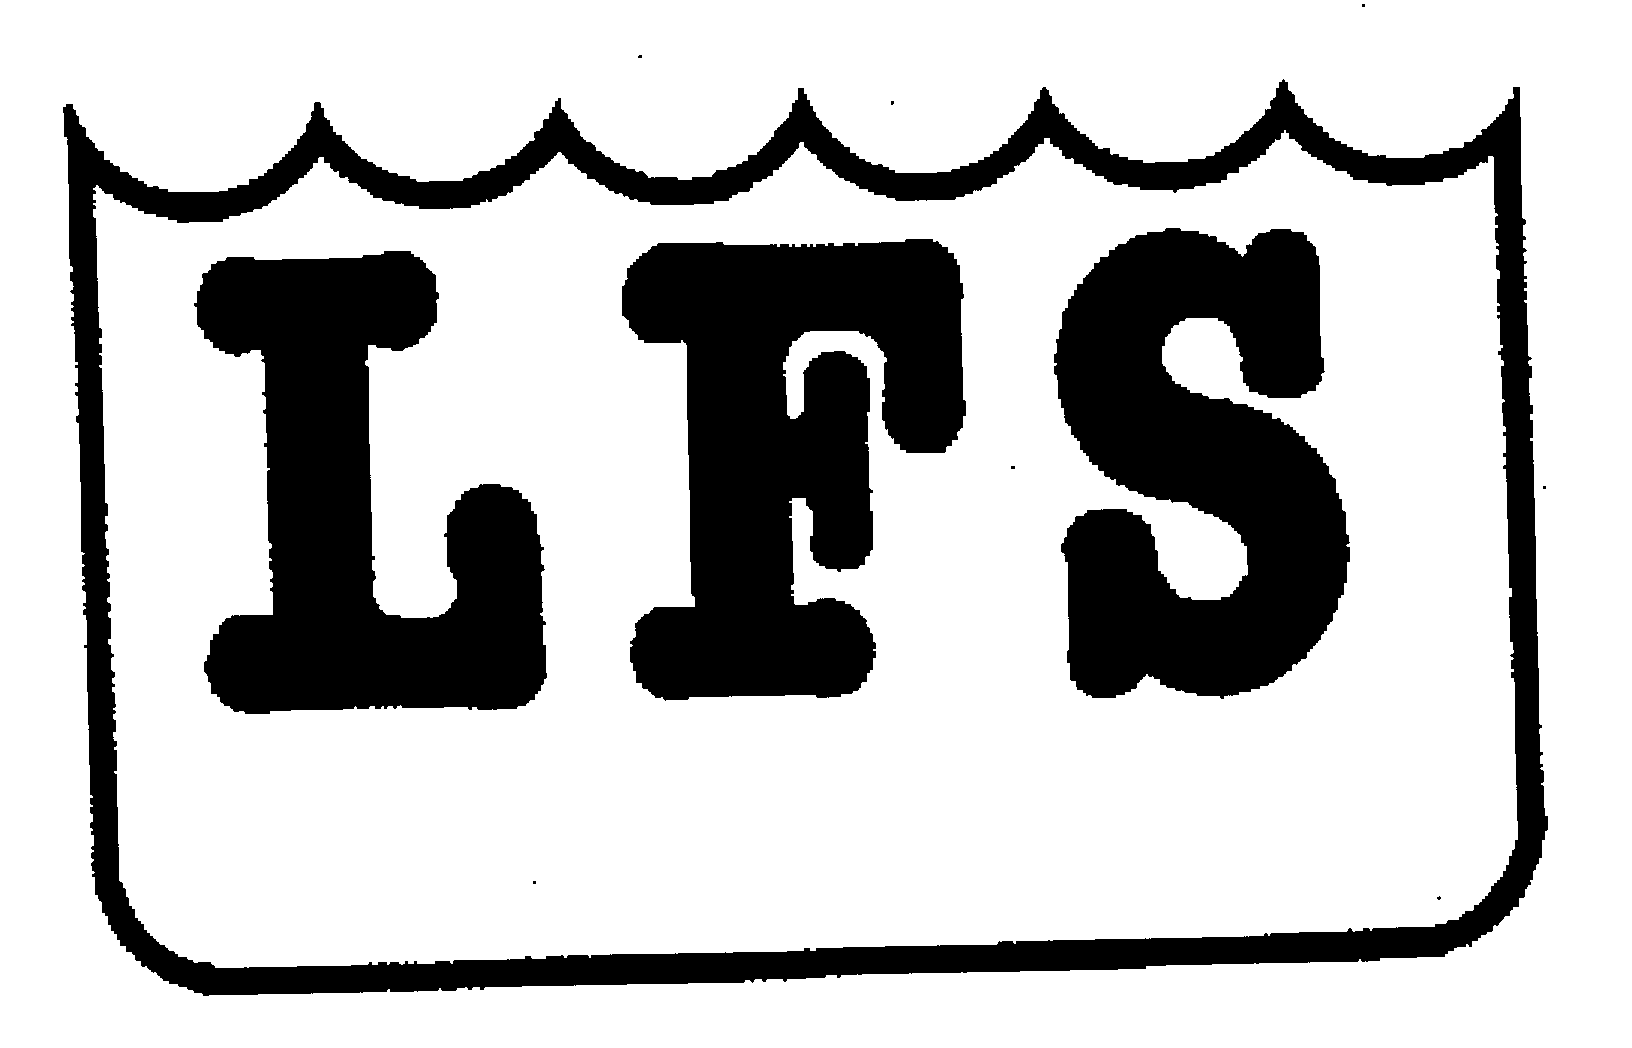 Trademark Logo LFS